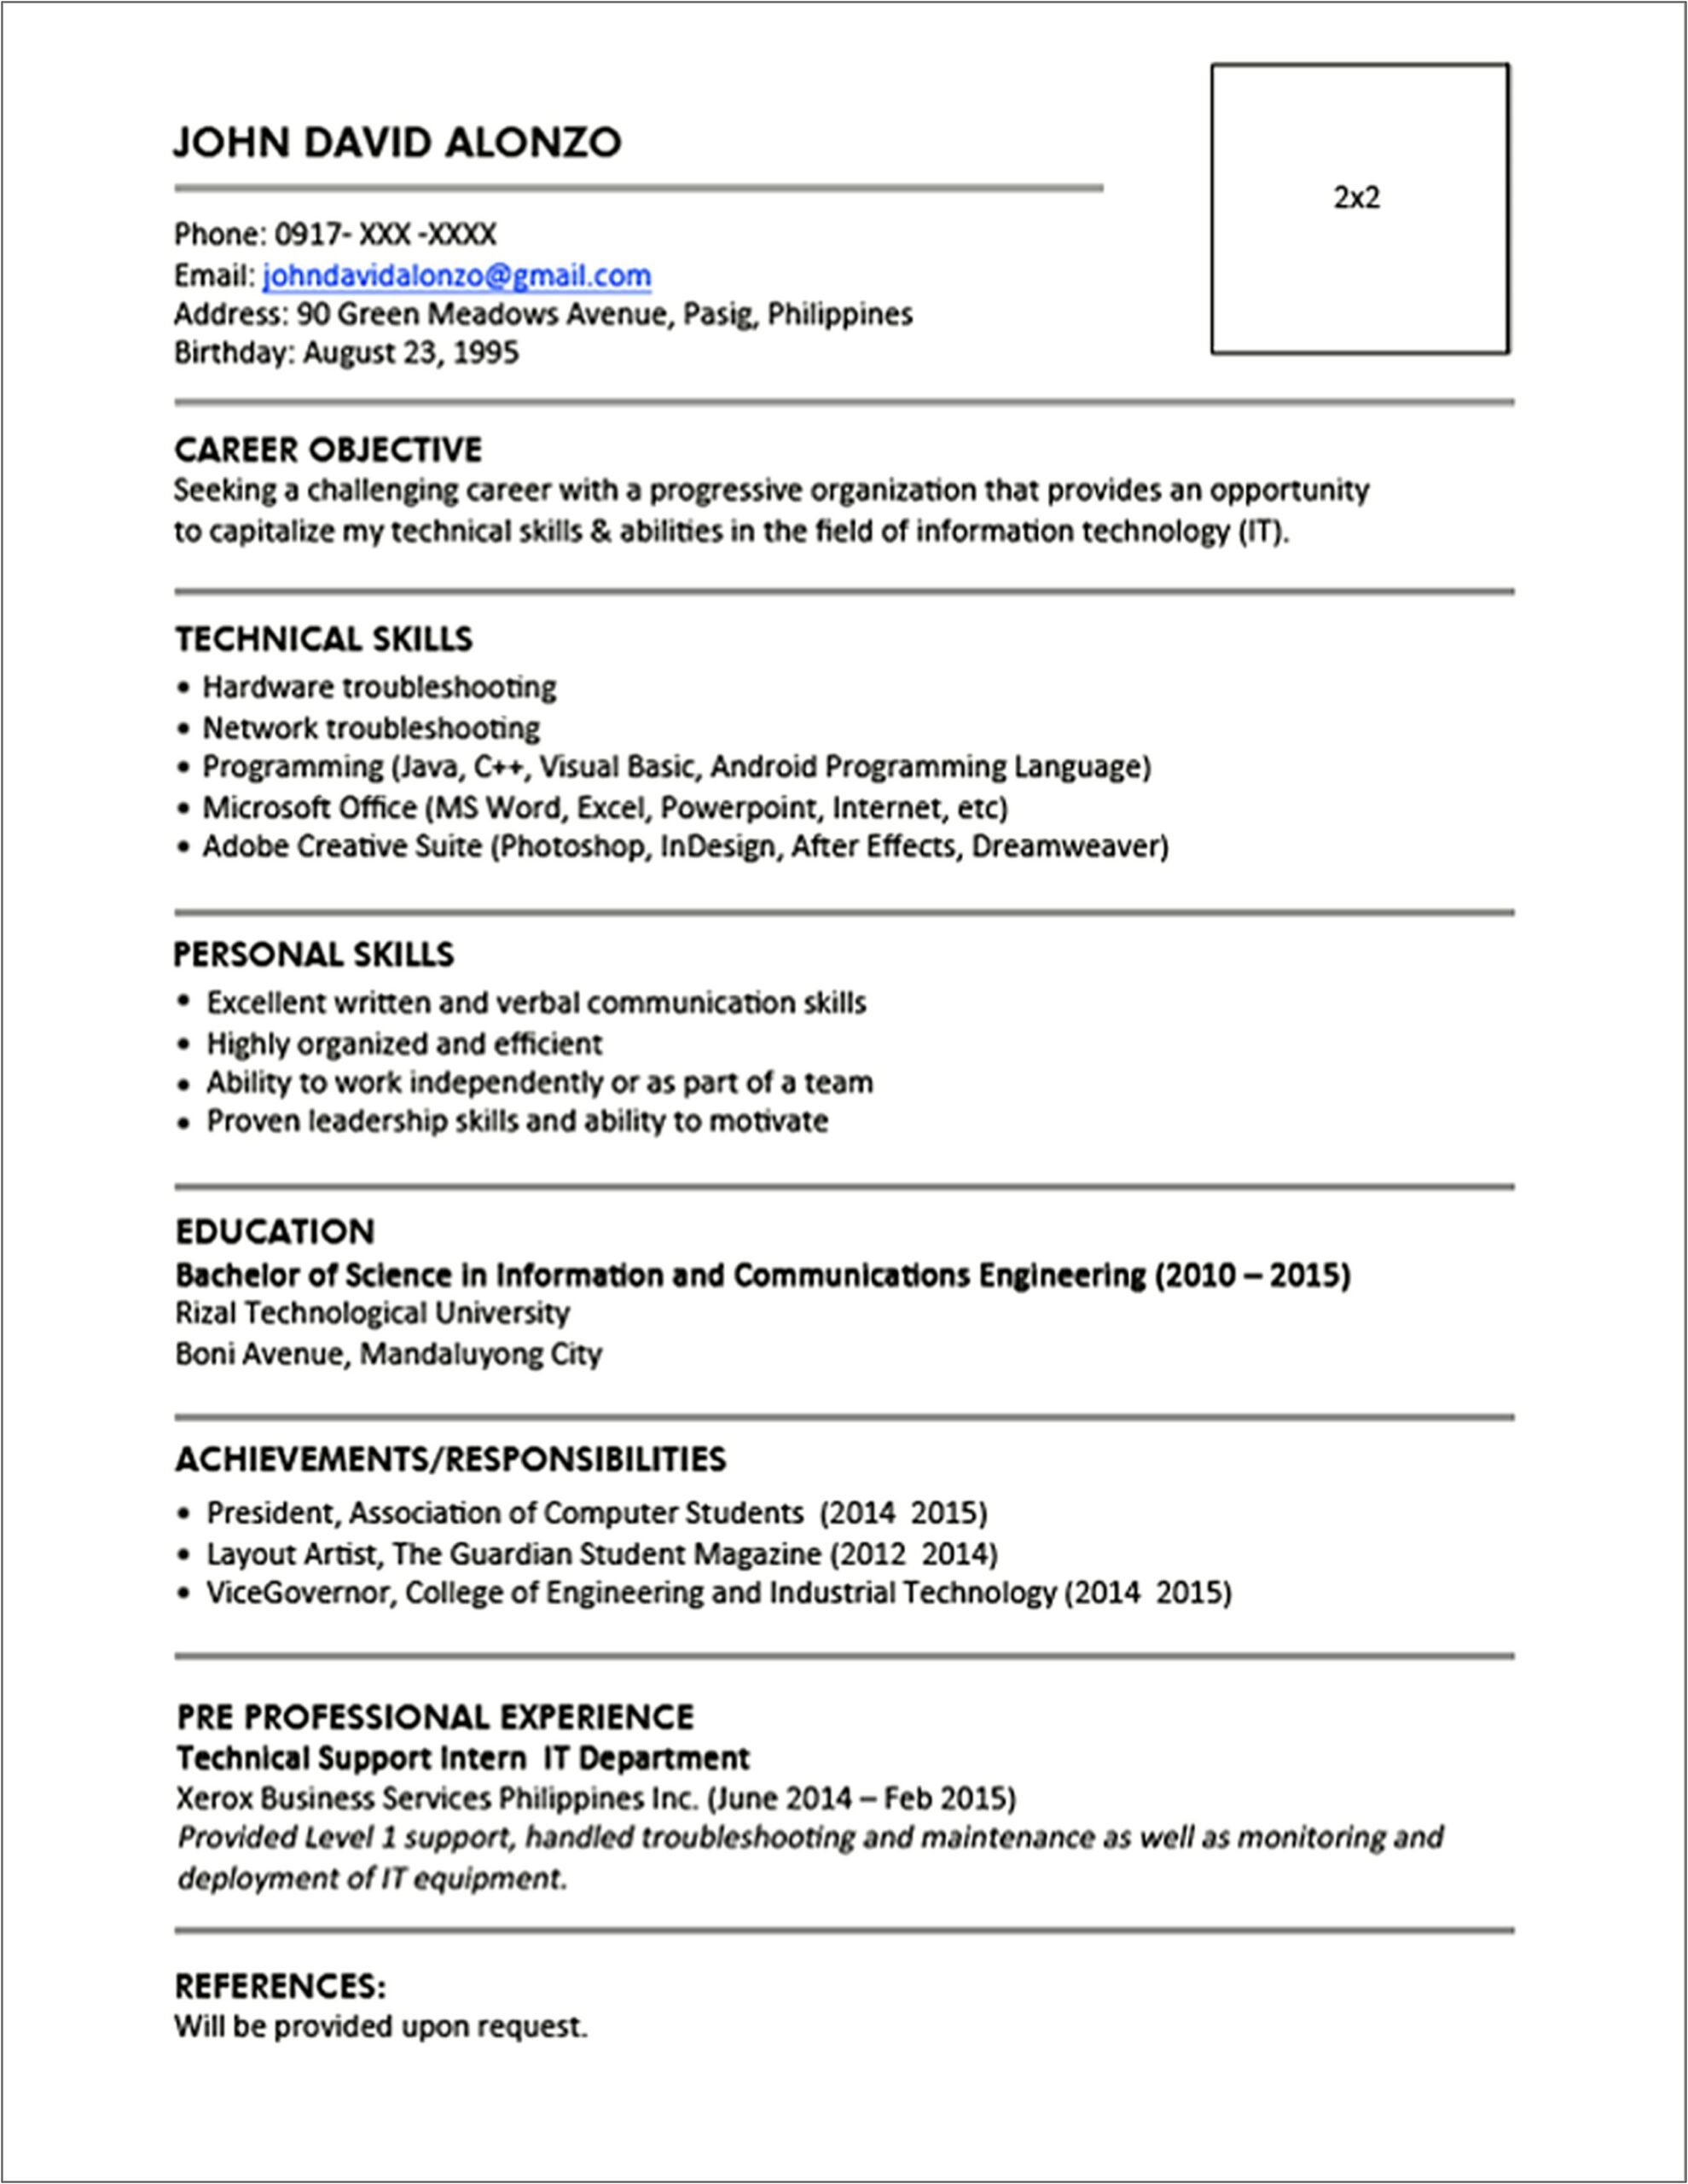 Resume Sample Philippines Fresh Graduate